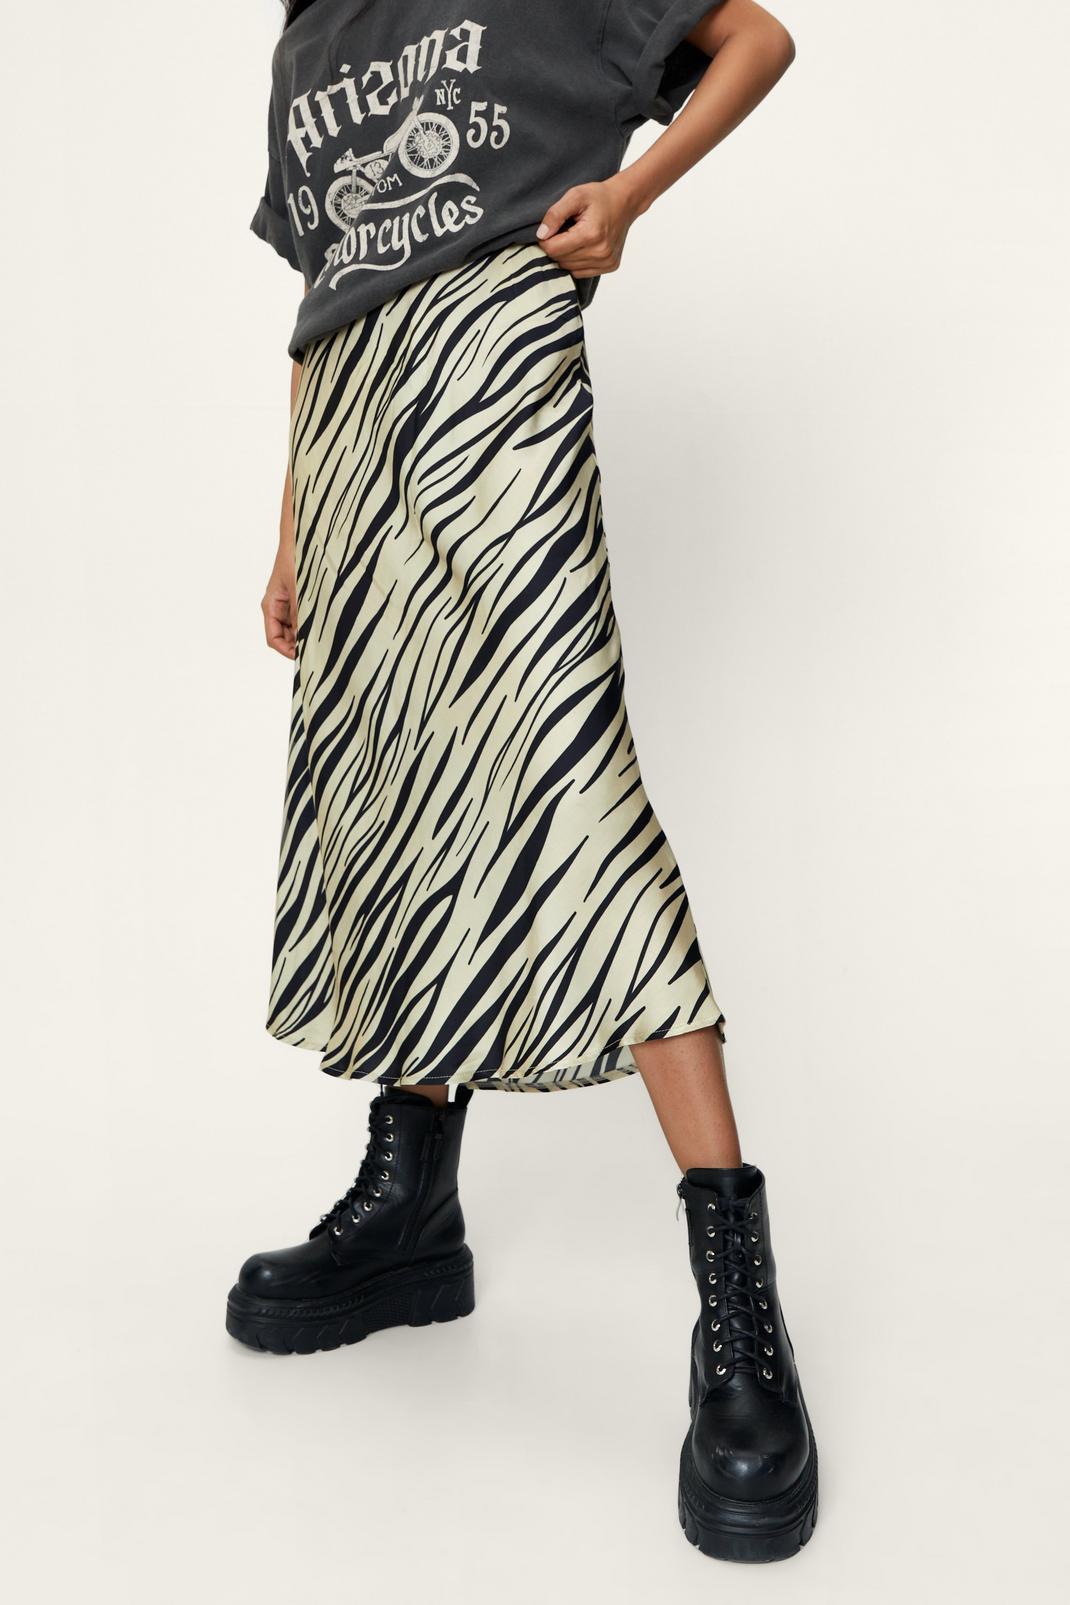 808 Zebra Print Bias Cut Satin Midi Skirt image number 2